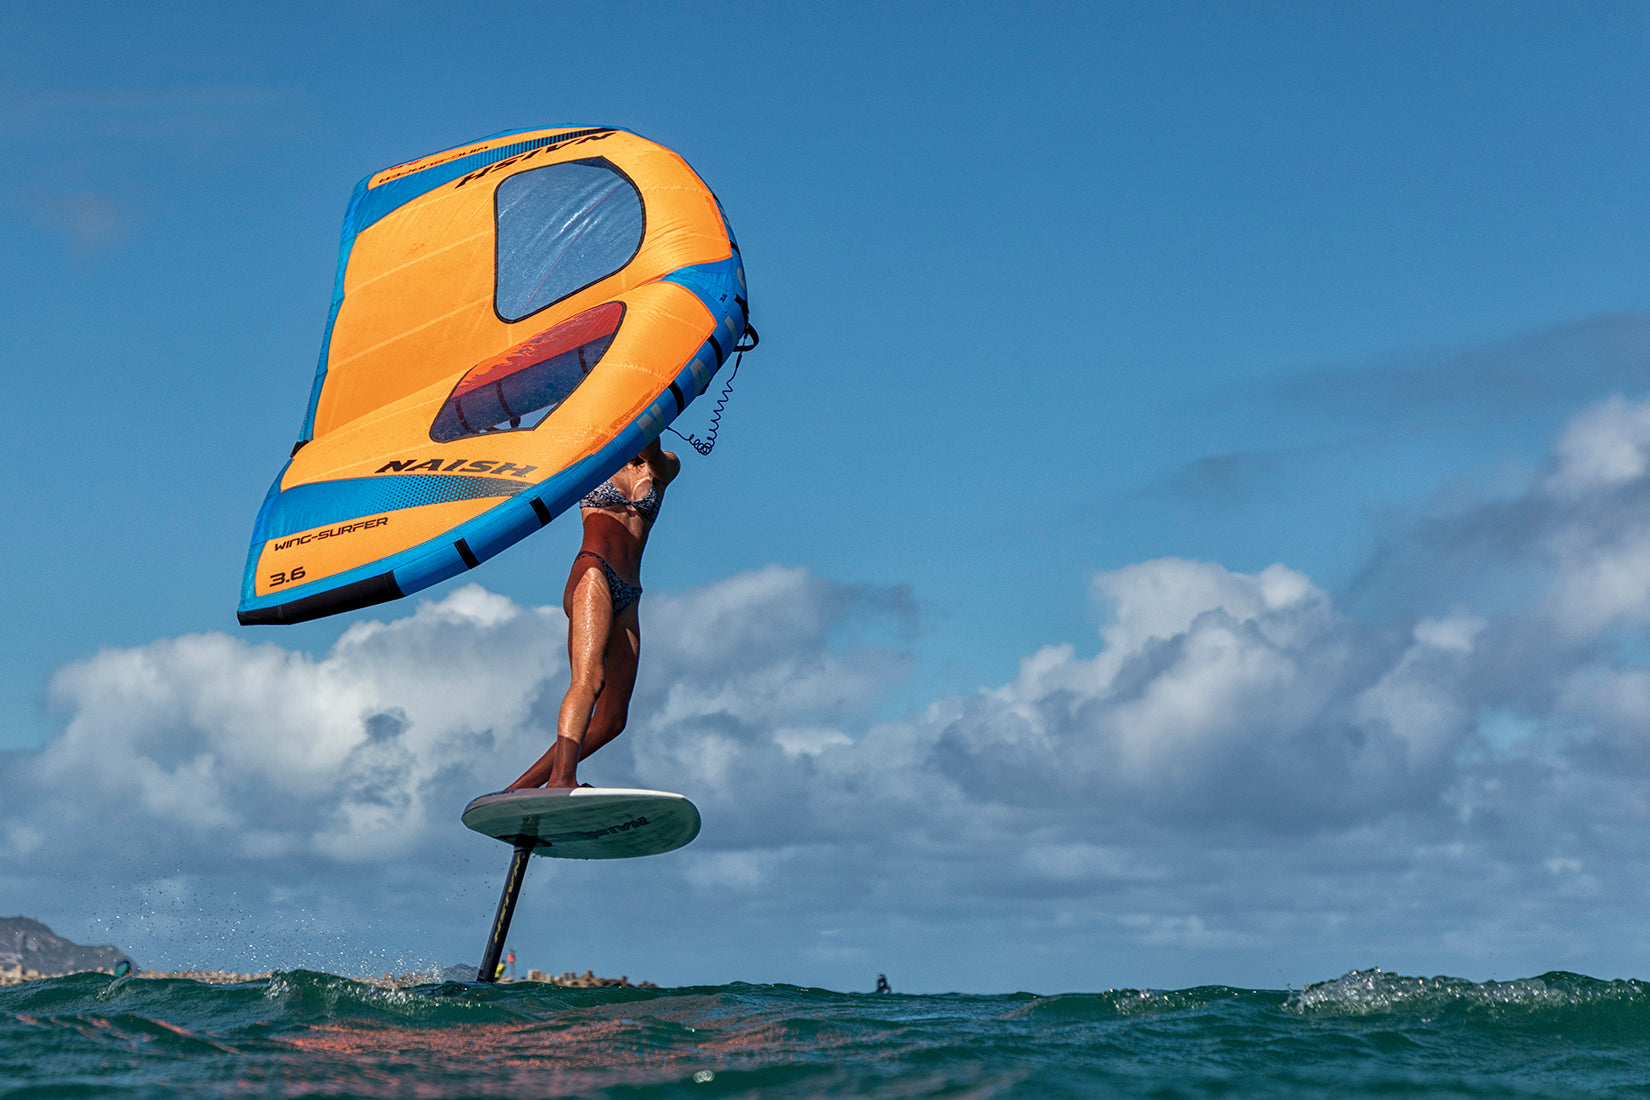 Naish S26 Wing Surfer 4.6 meter - DEEP DISCOUNTS! – Wind-NC